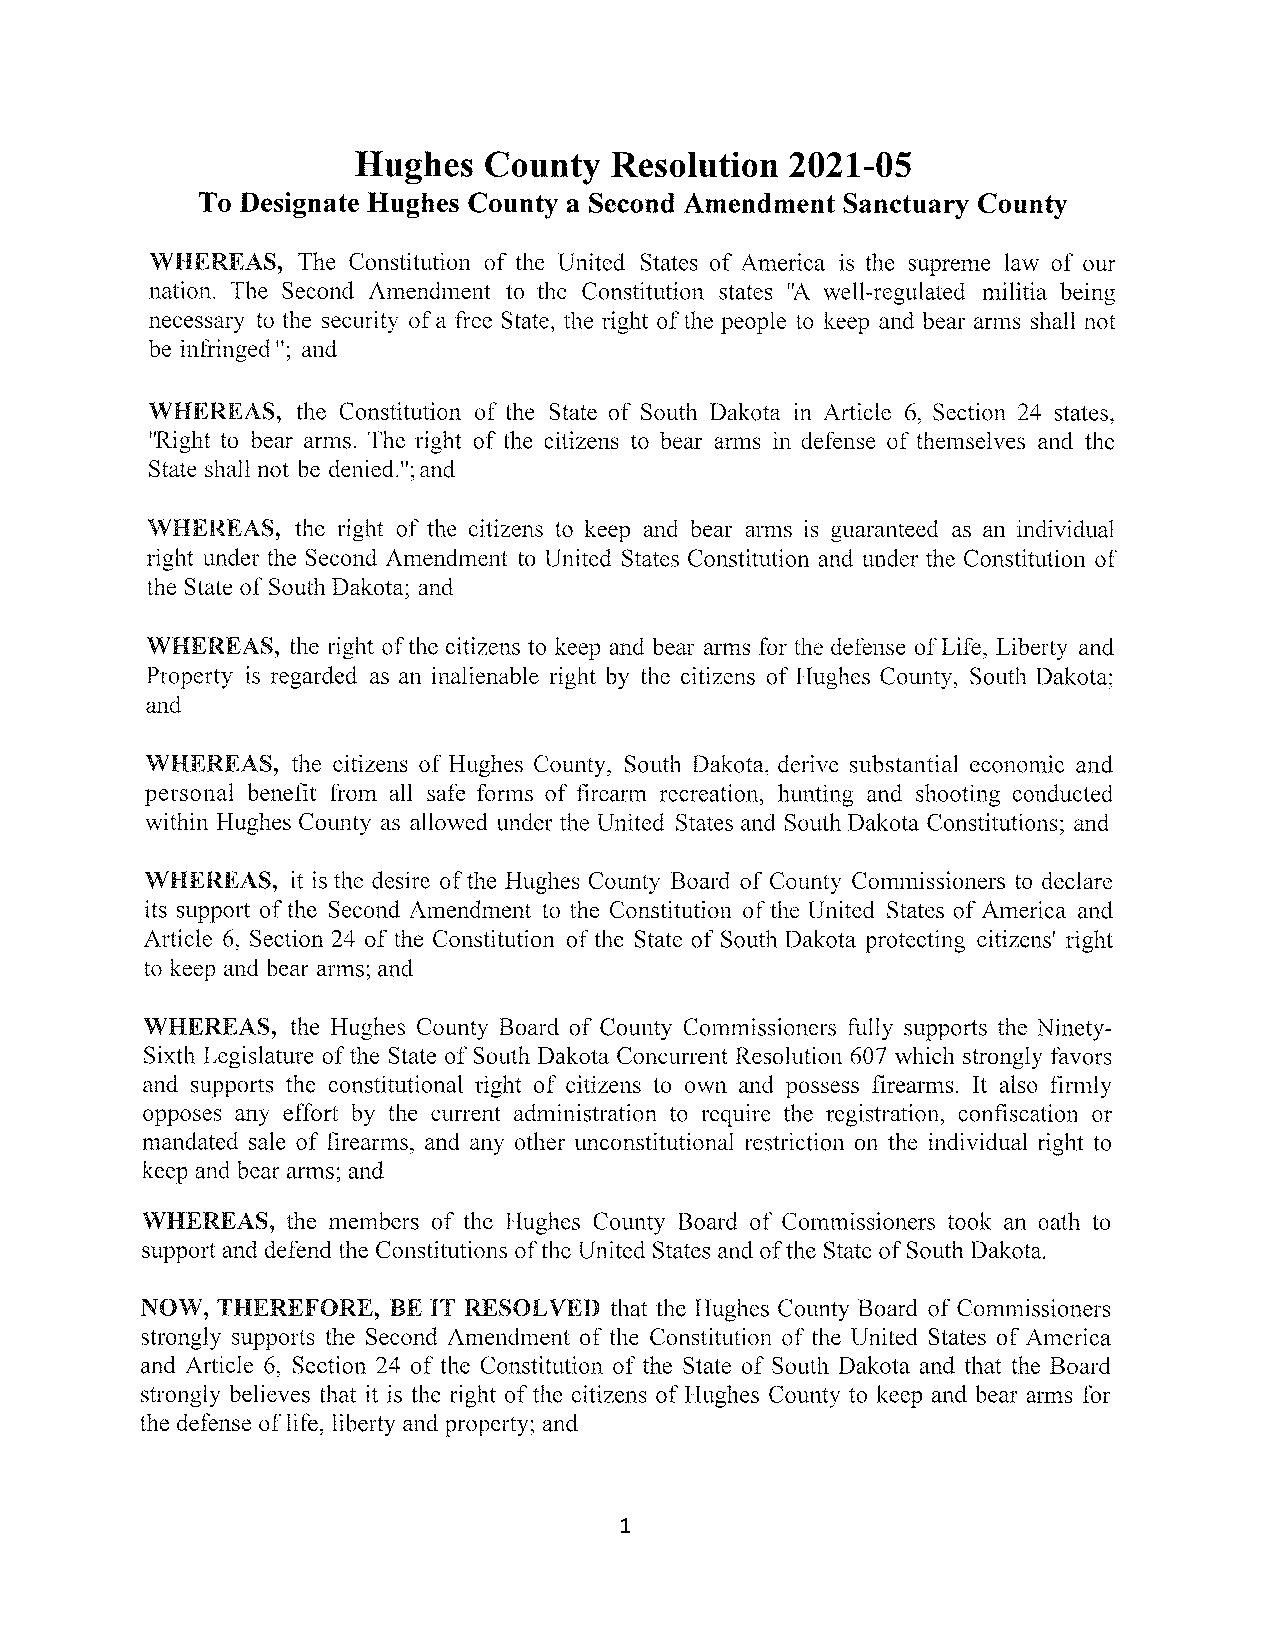 Hughes County South Dakota Resolution Page 1